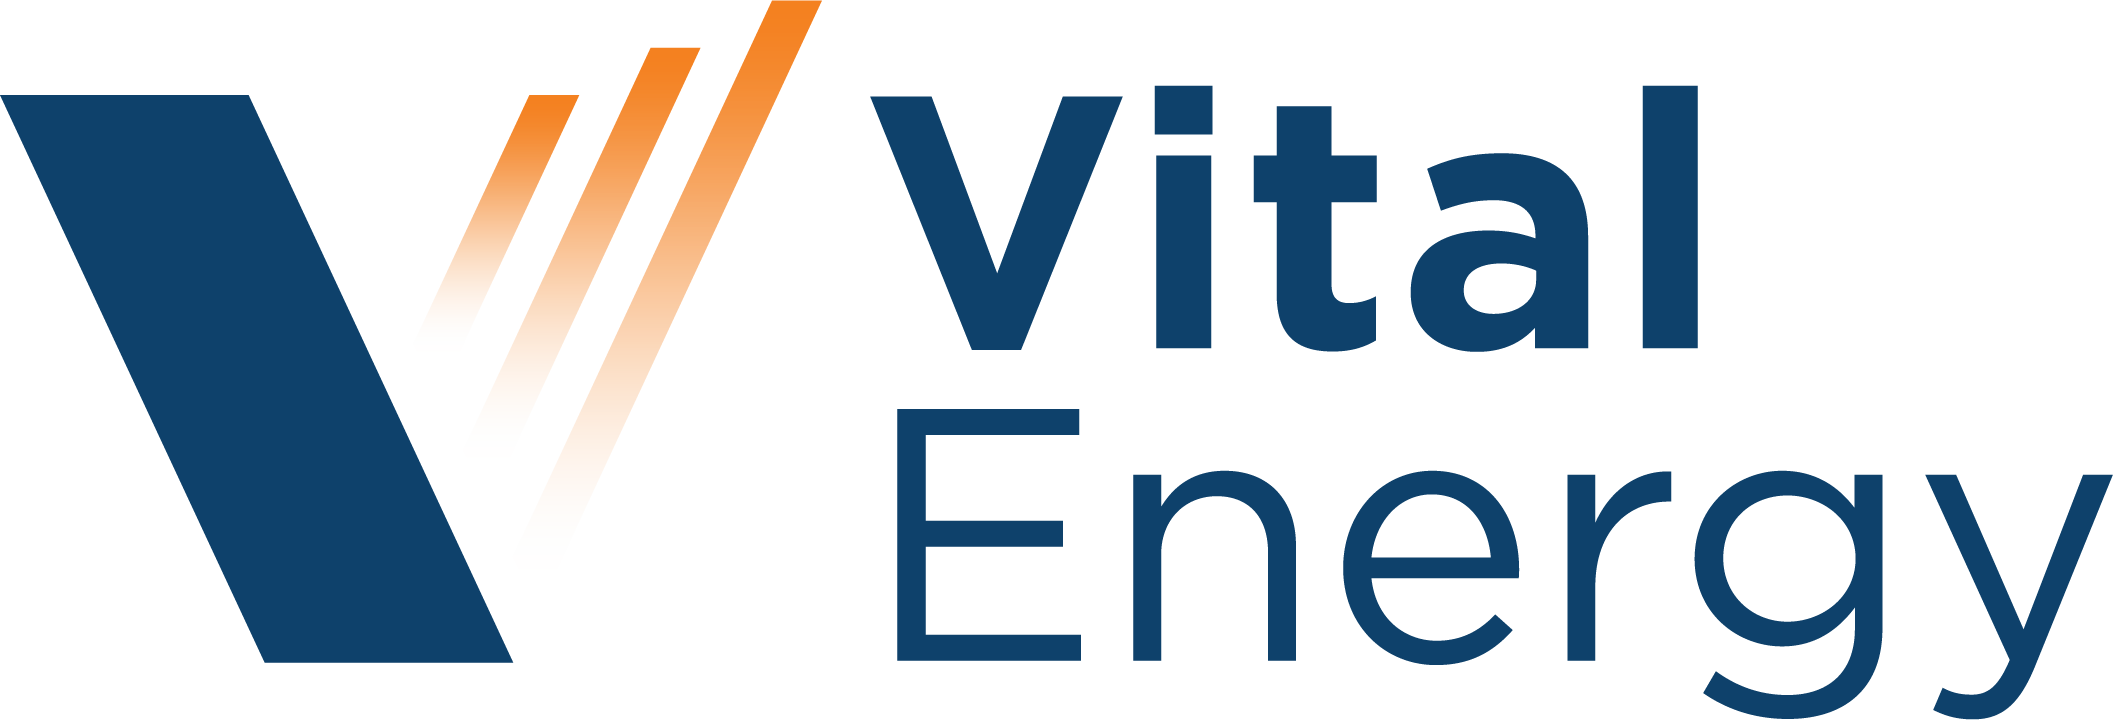 Vital Energy Logo